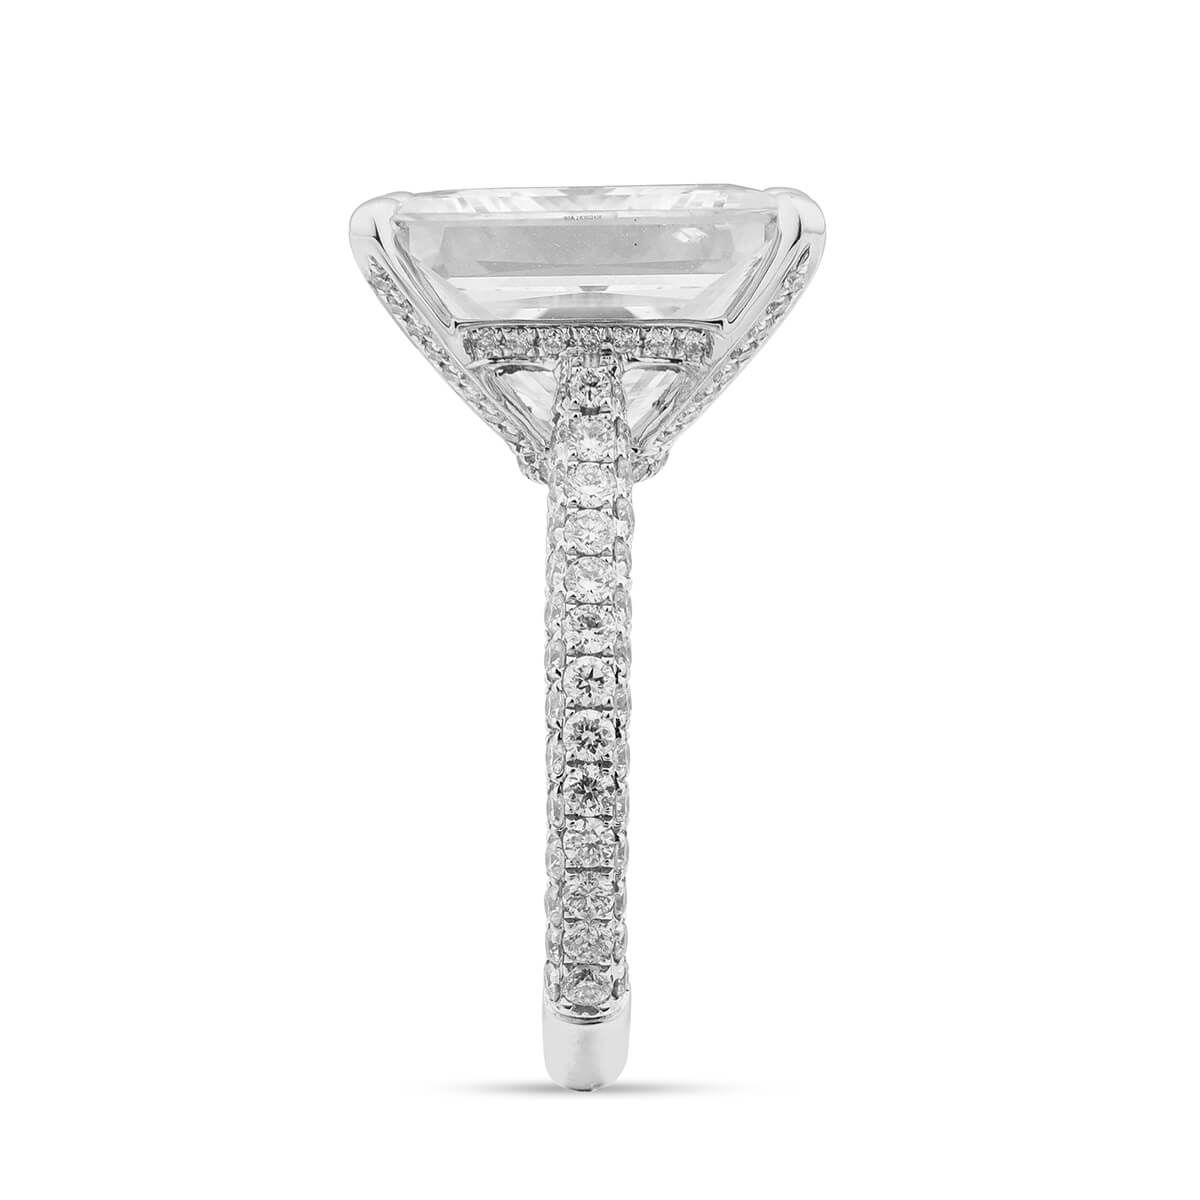  White Diamond Ring, 10.05 Ct. (11.09 Ct. TW), Princess shape, GIA Certified, 2183602408